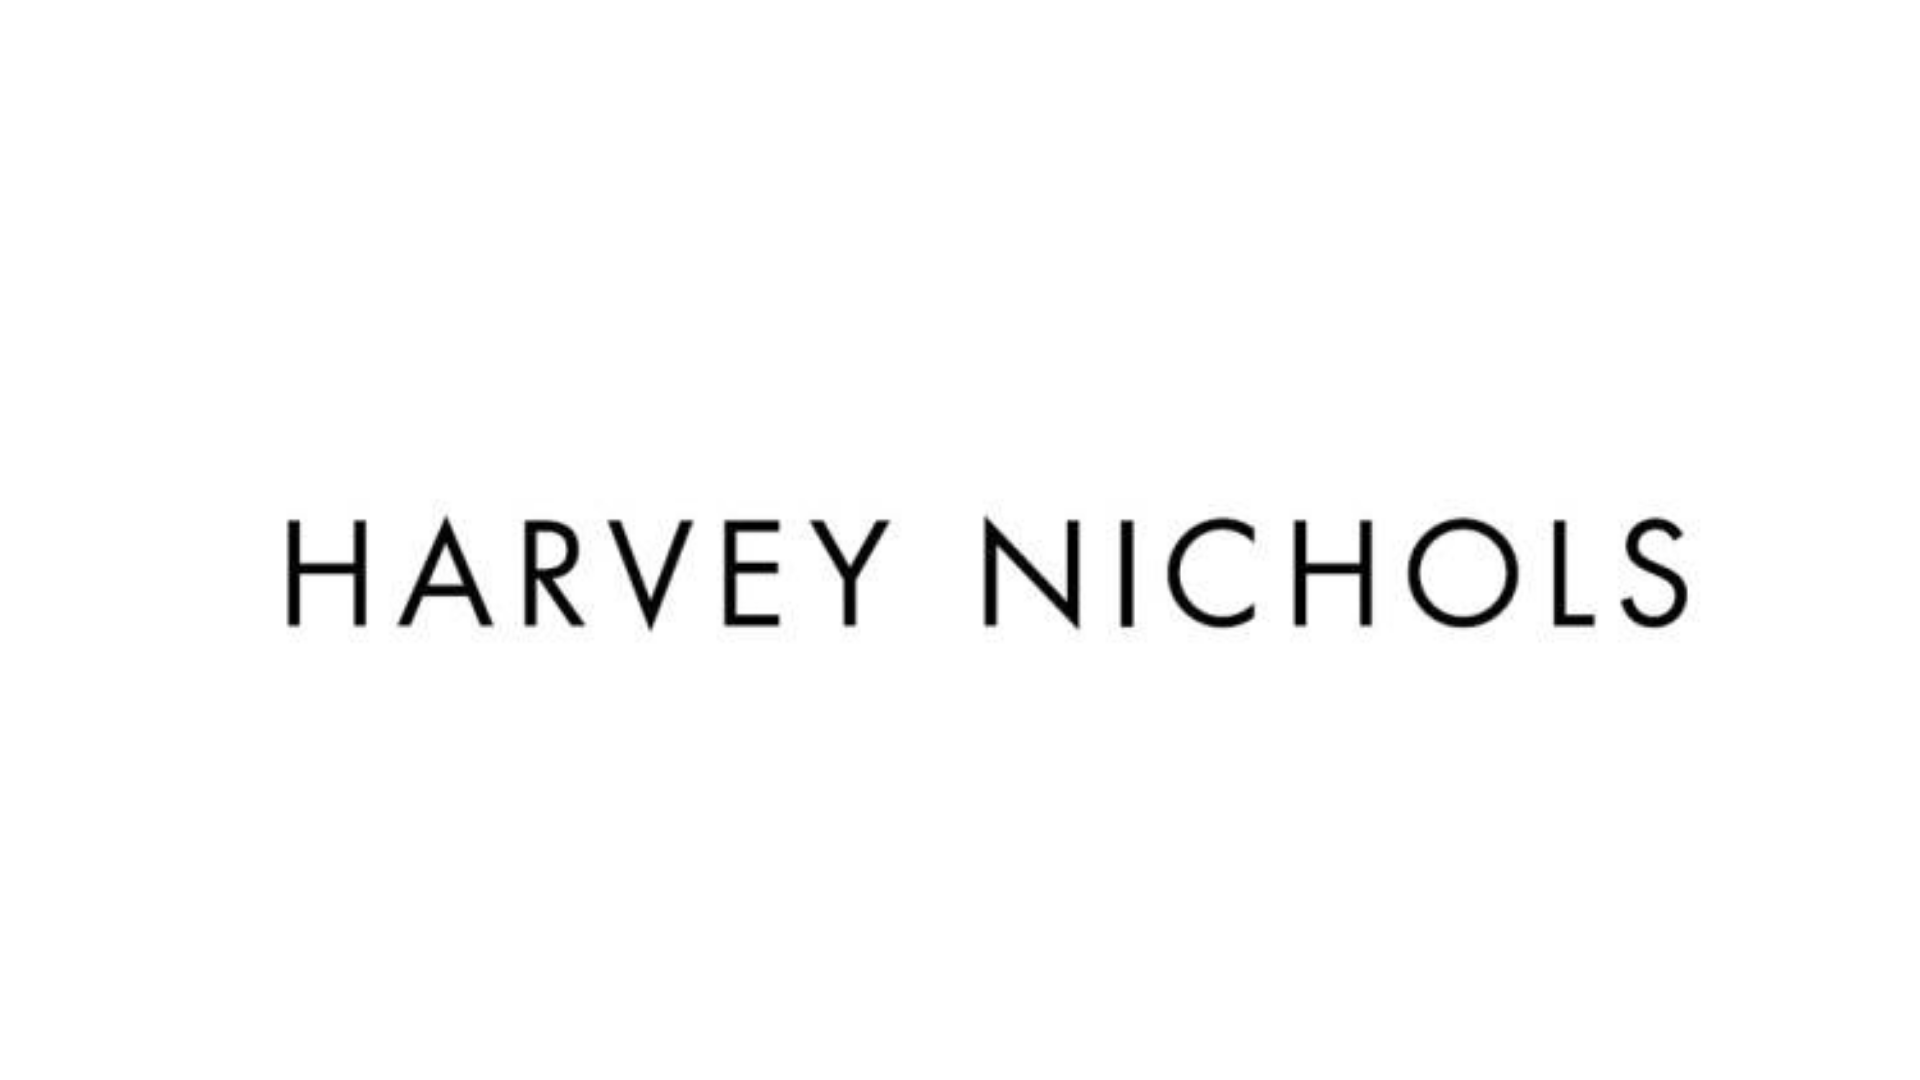 Harvey Nichols brand's logo